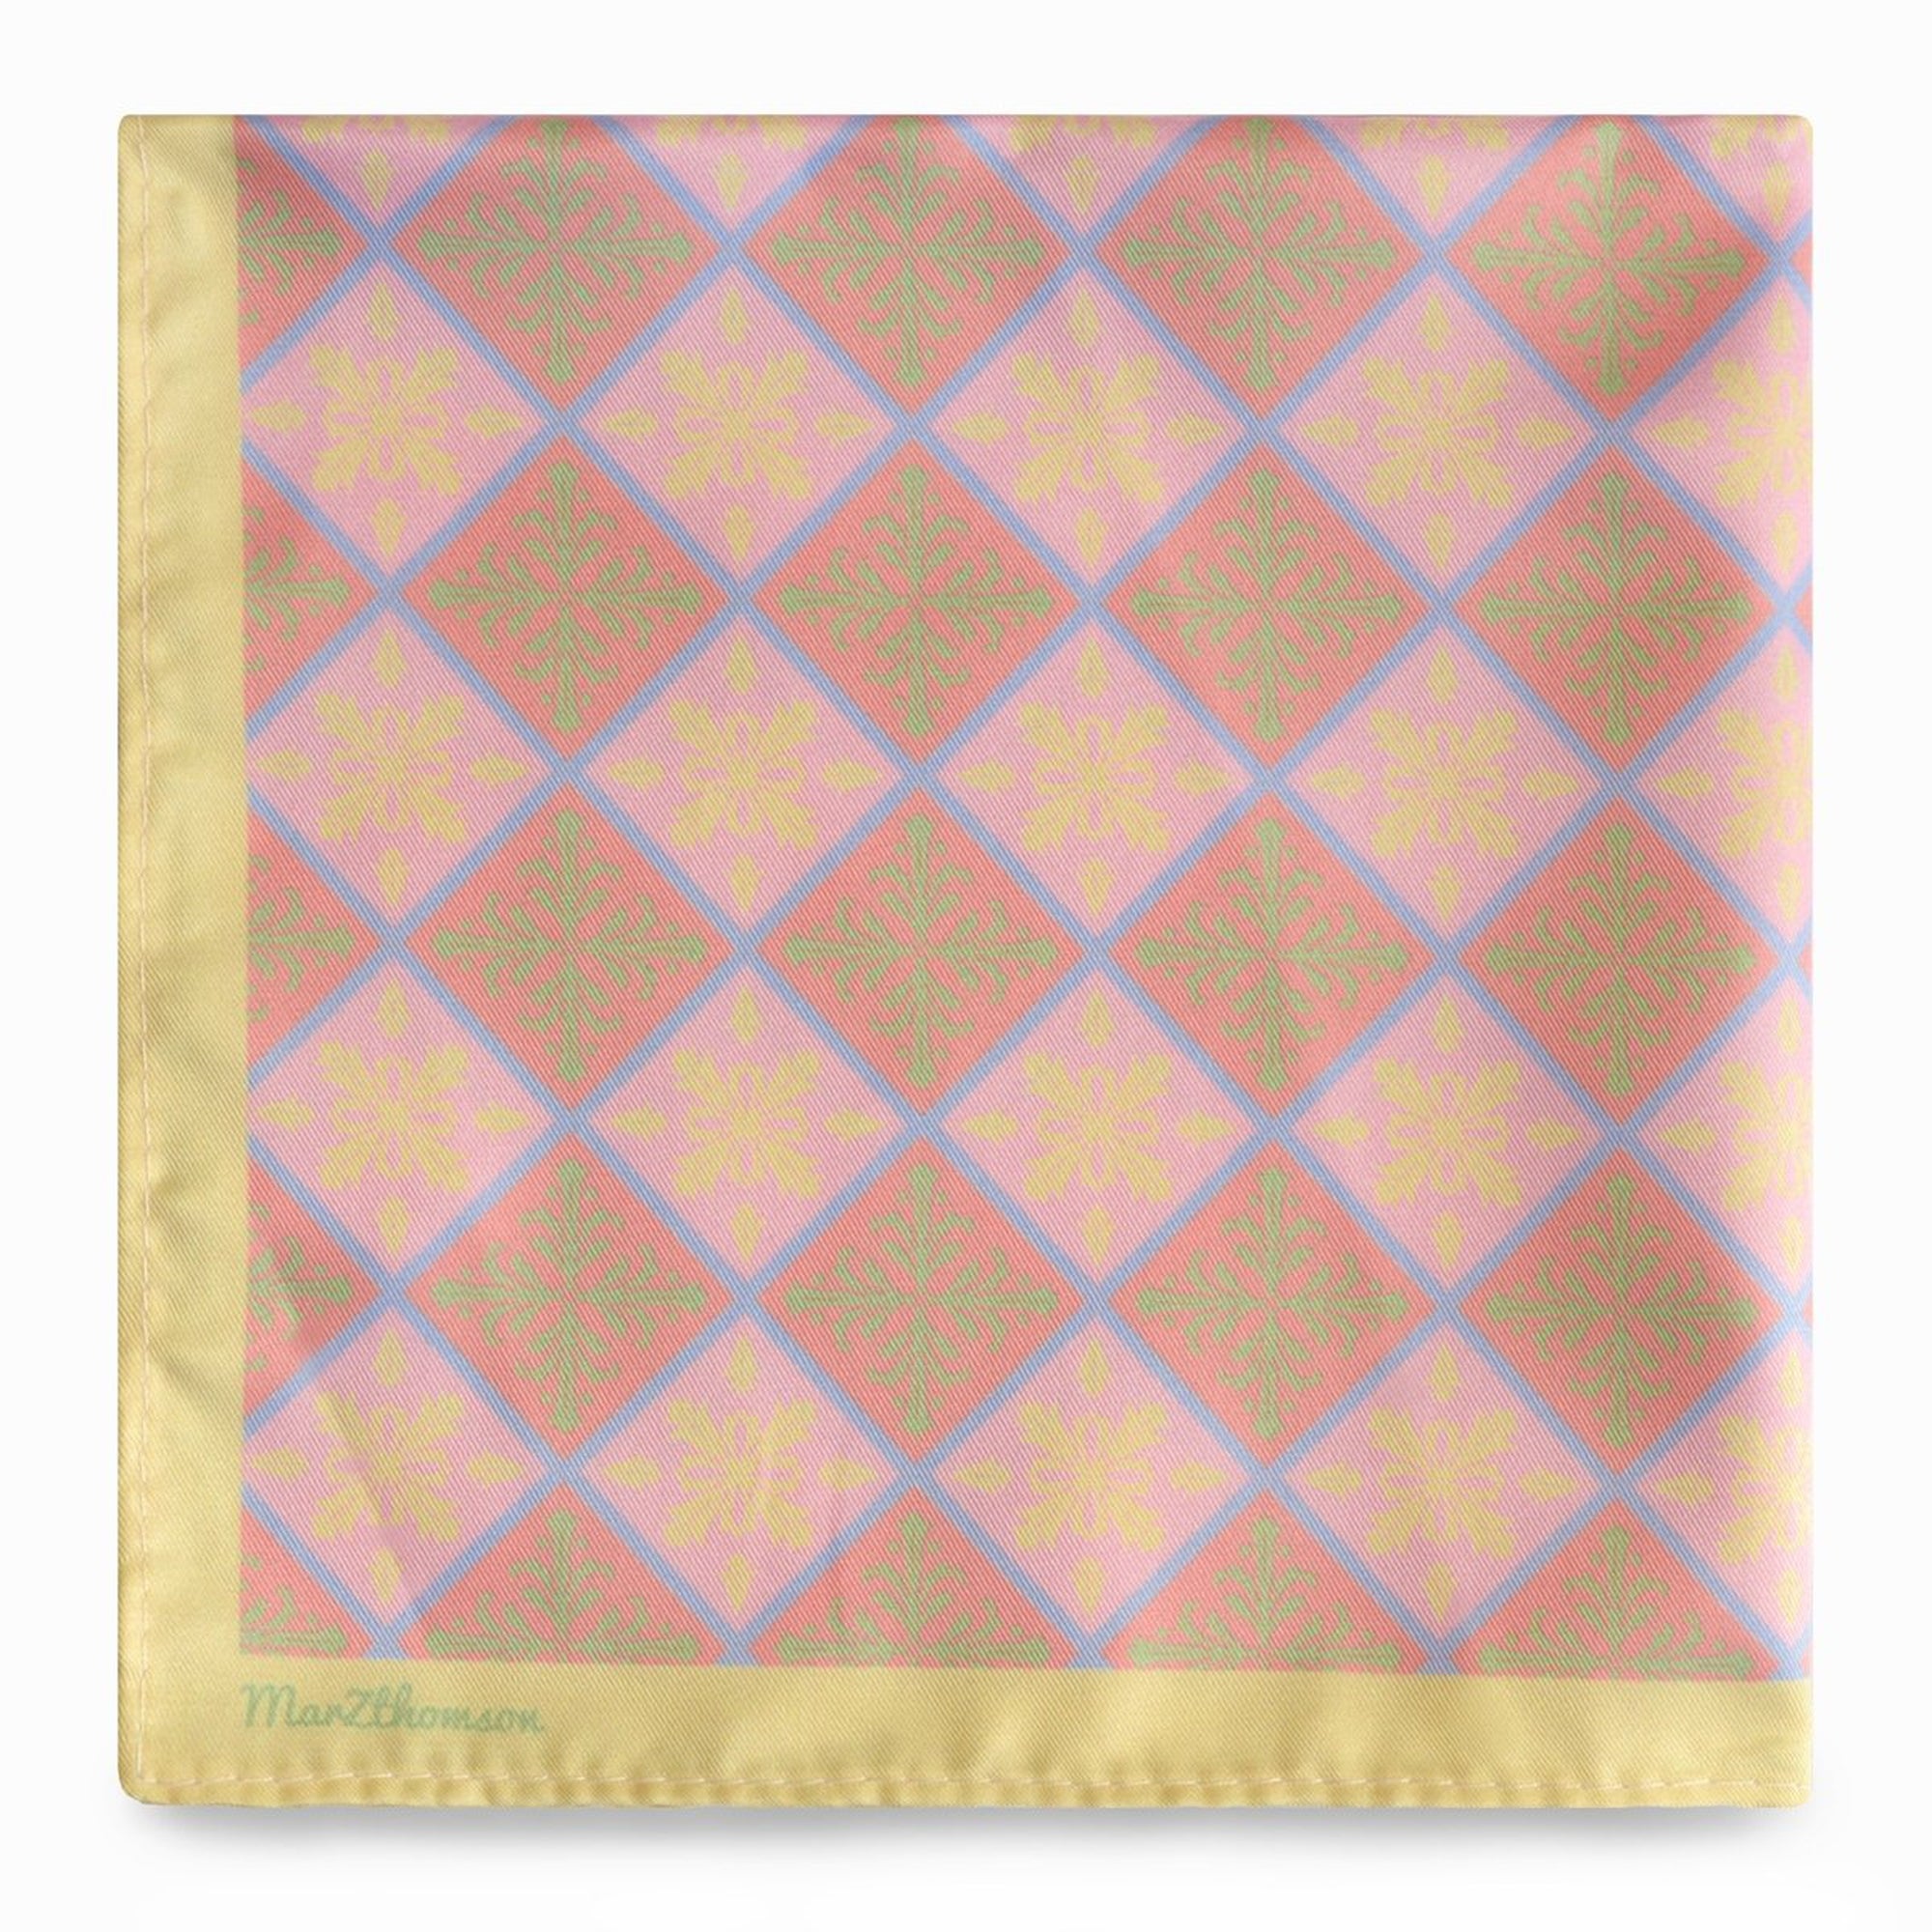 Peranakan Tiles Pocket Square-Pocket Squares-MarZthomson-Pink with Yellow trim-Cufflinks.com.sg